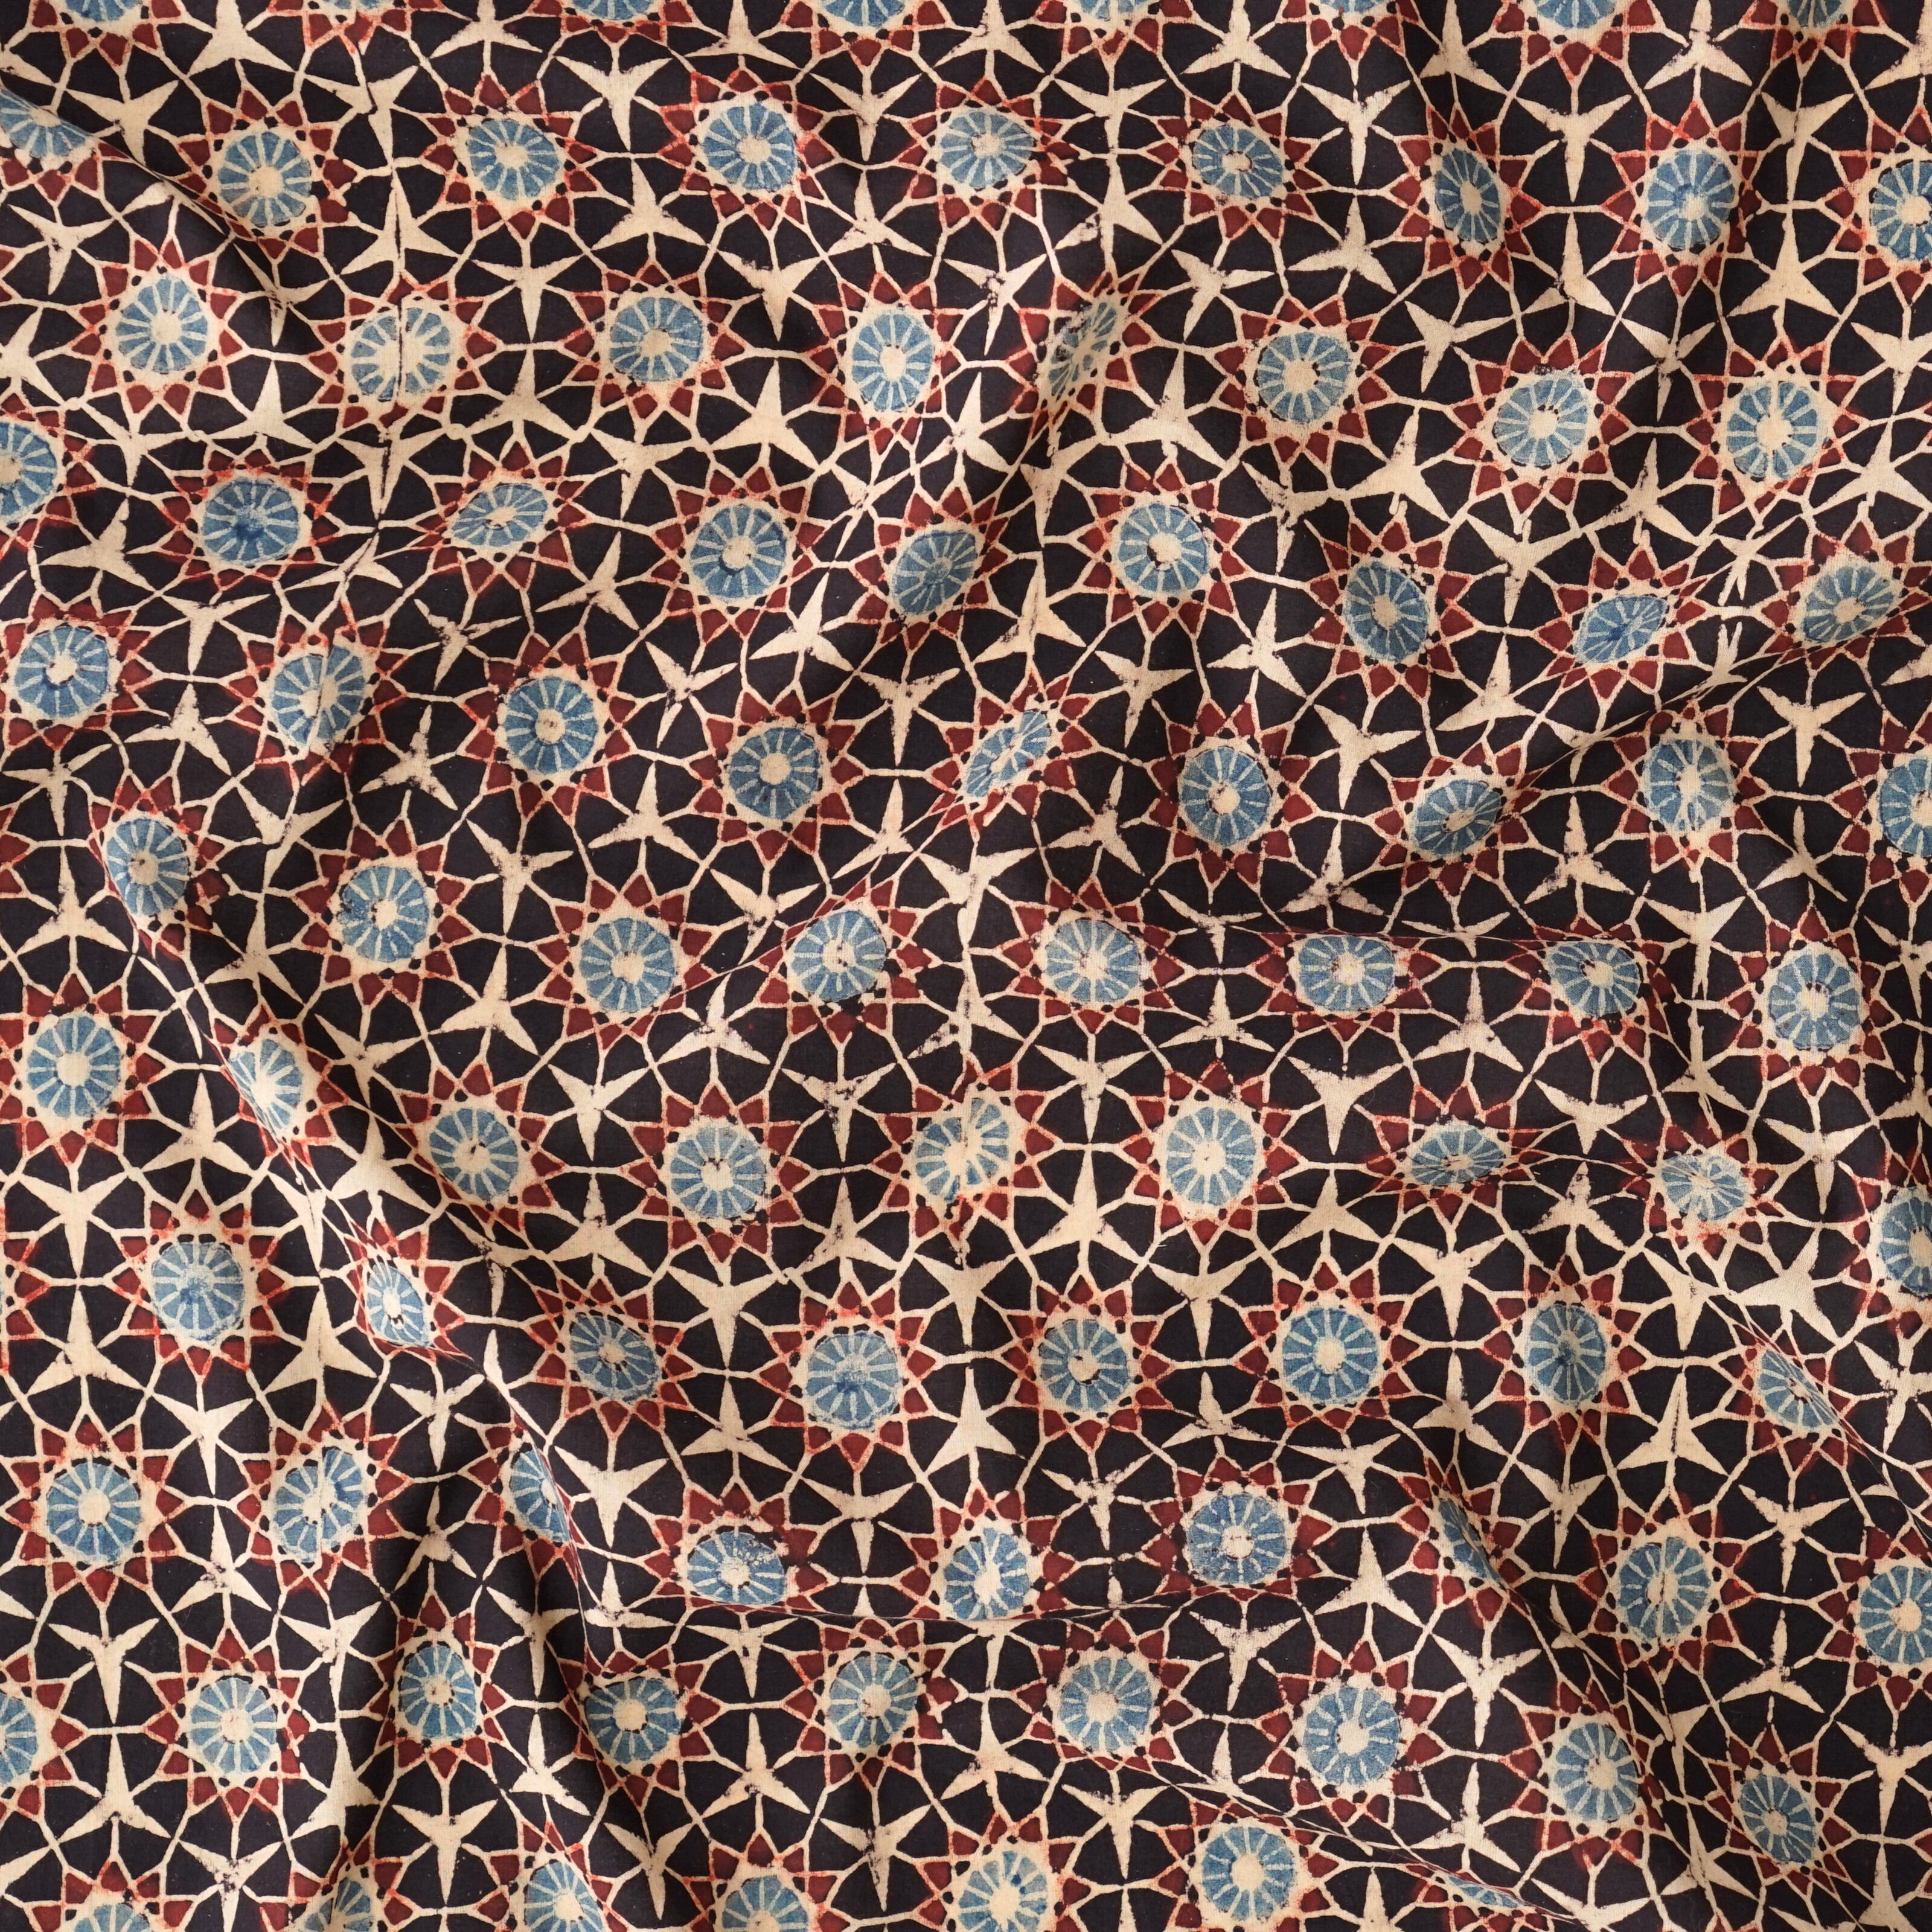 Block Printed Fabric, 100% Cotton, Ajrak Design: Black Base, Madder Root Red, Blue, Cream Burst. Contrast